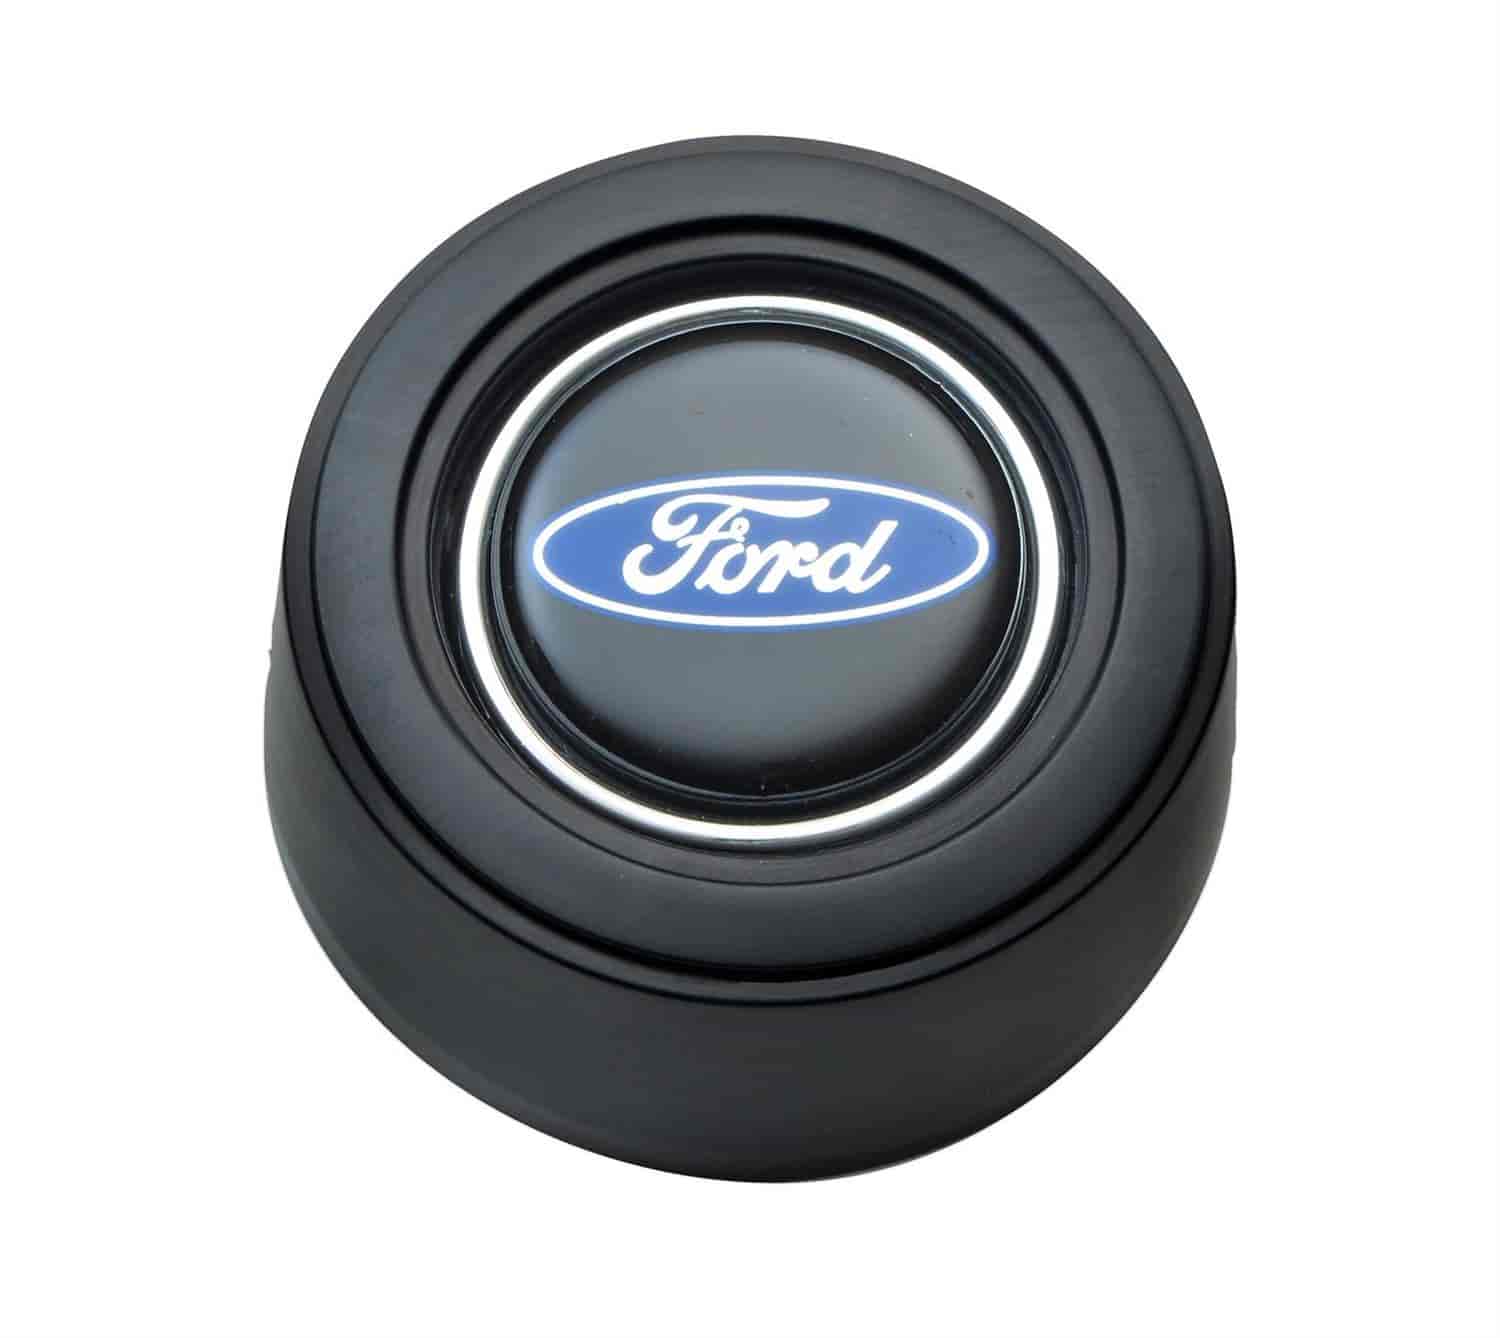 GT3 Hi-Rise Ford Oval Color Horn Button Black